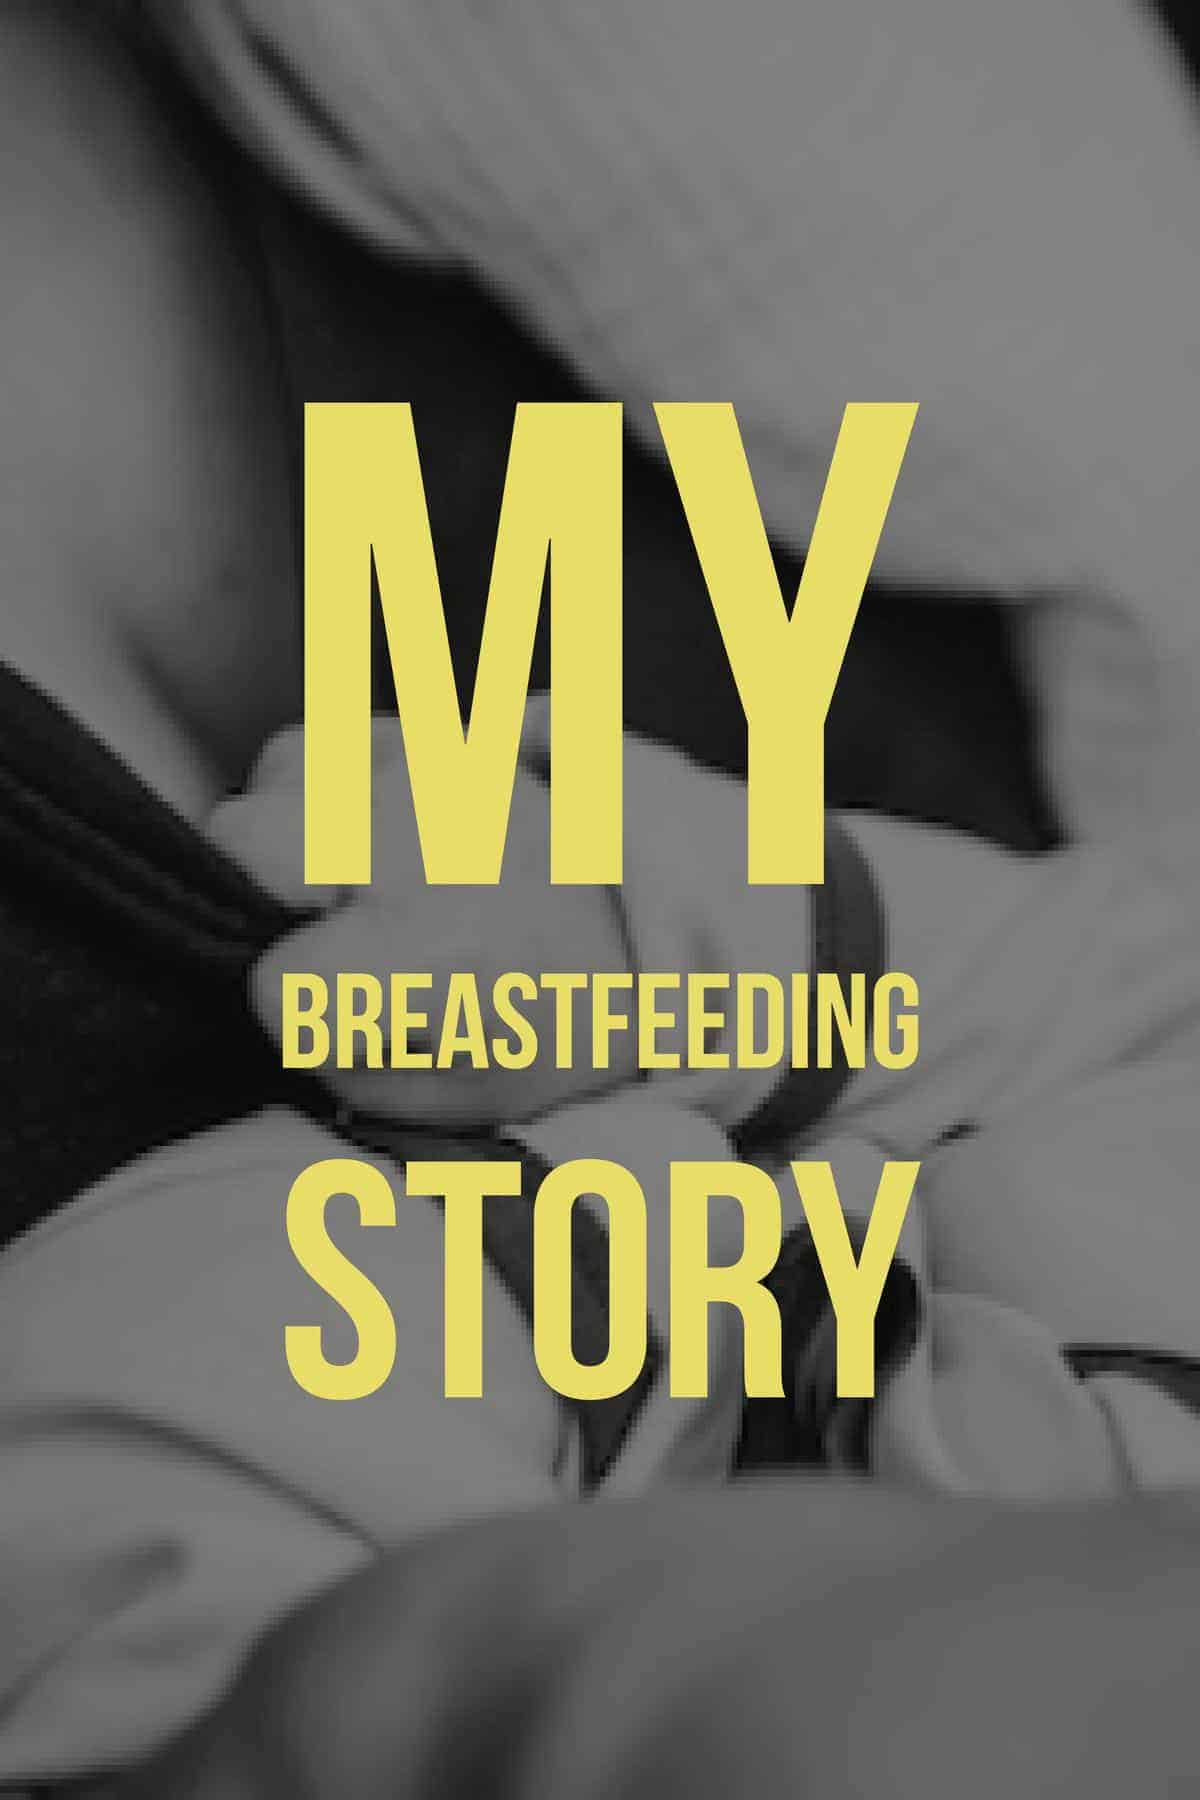 A Dietitian's breastfeeding story